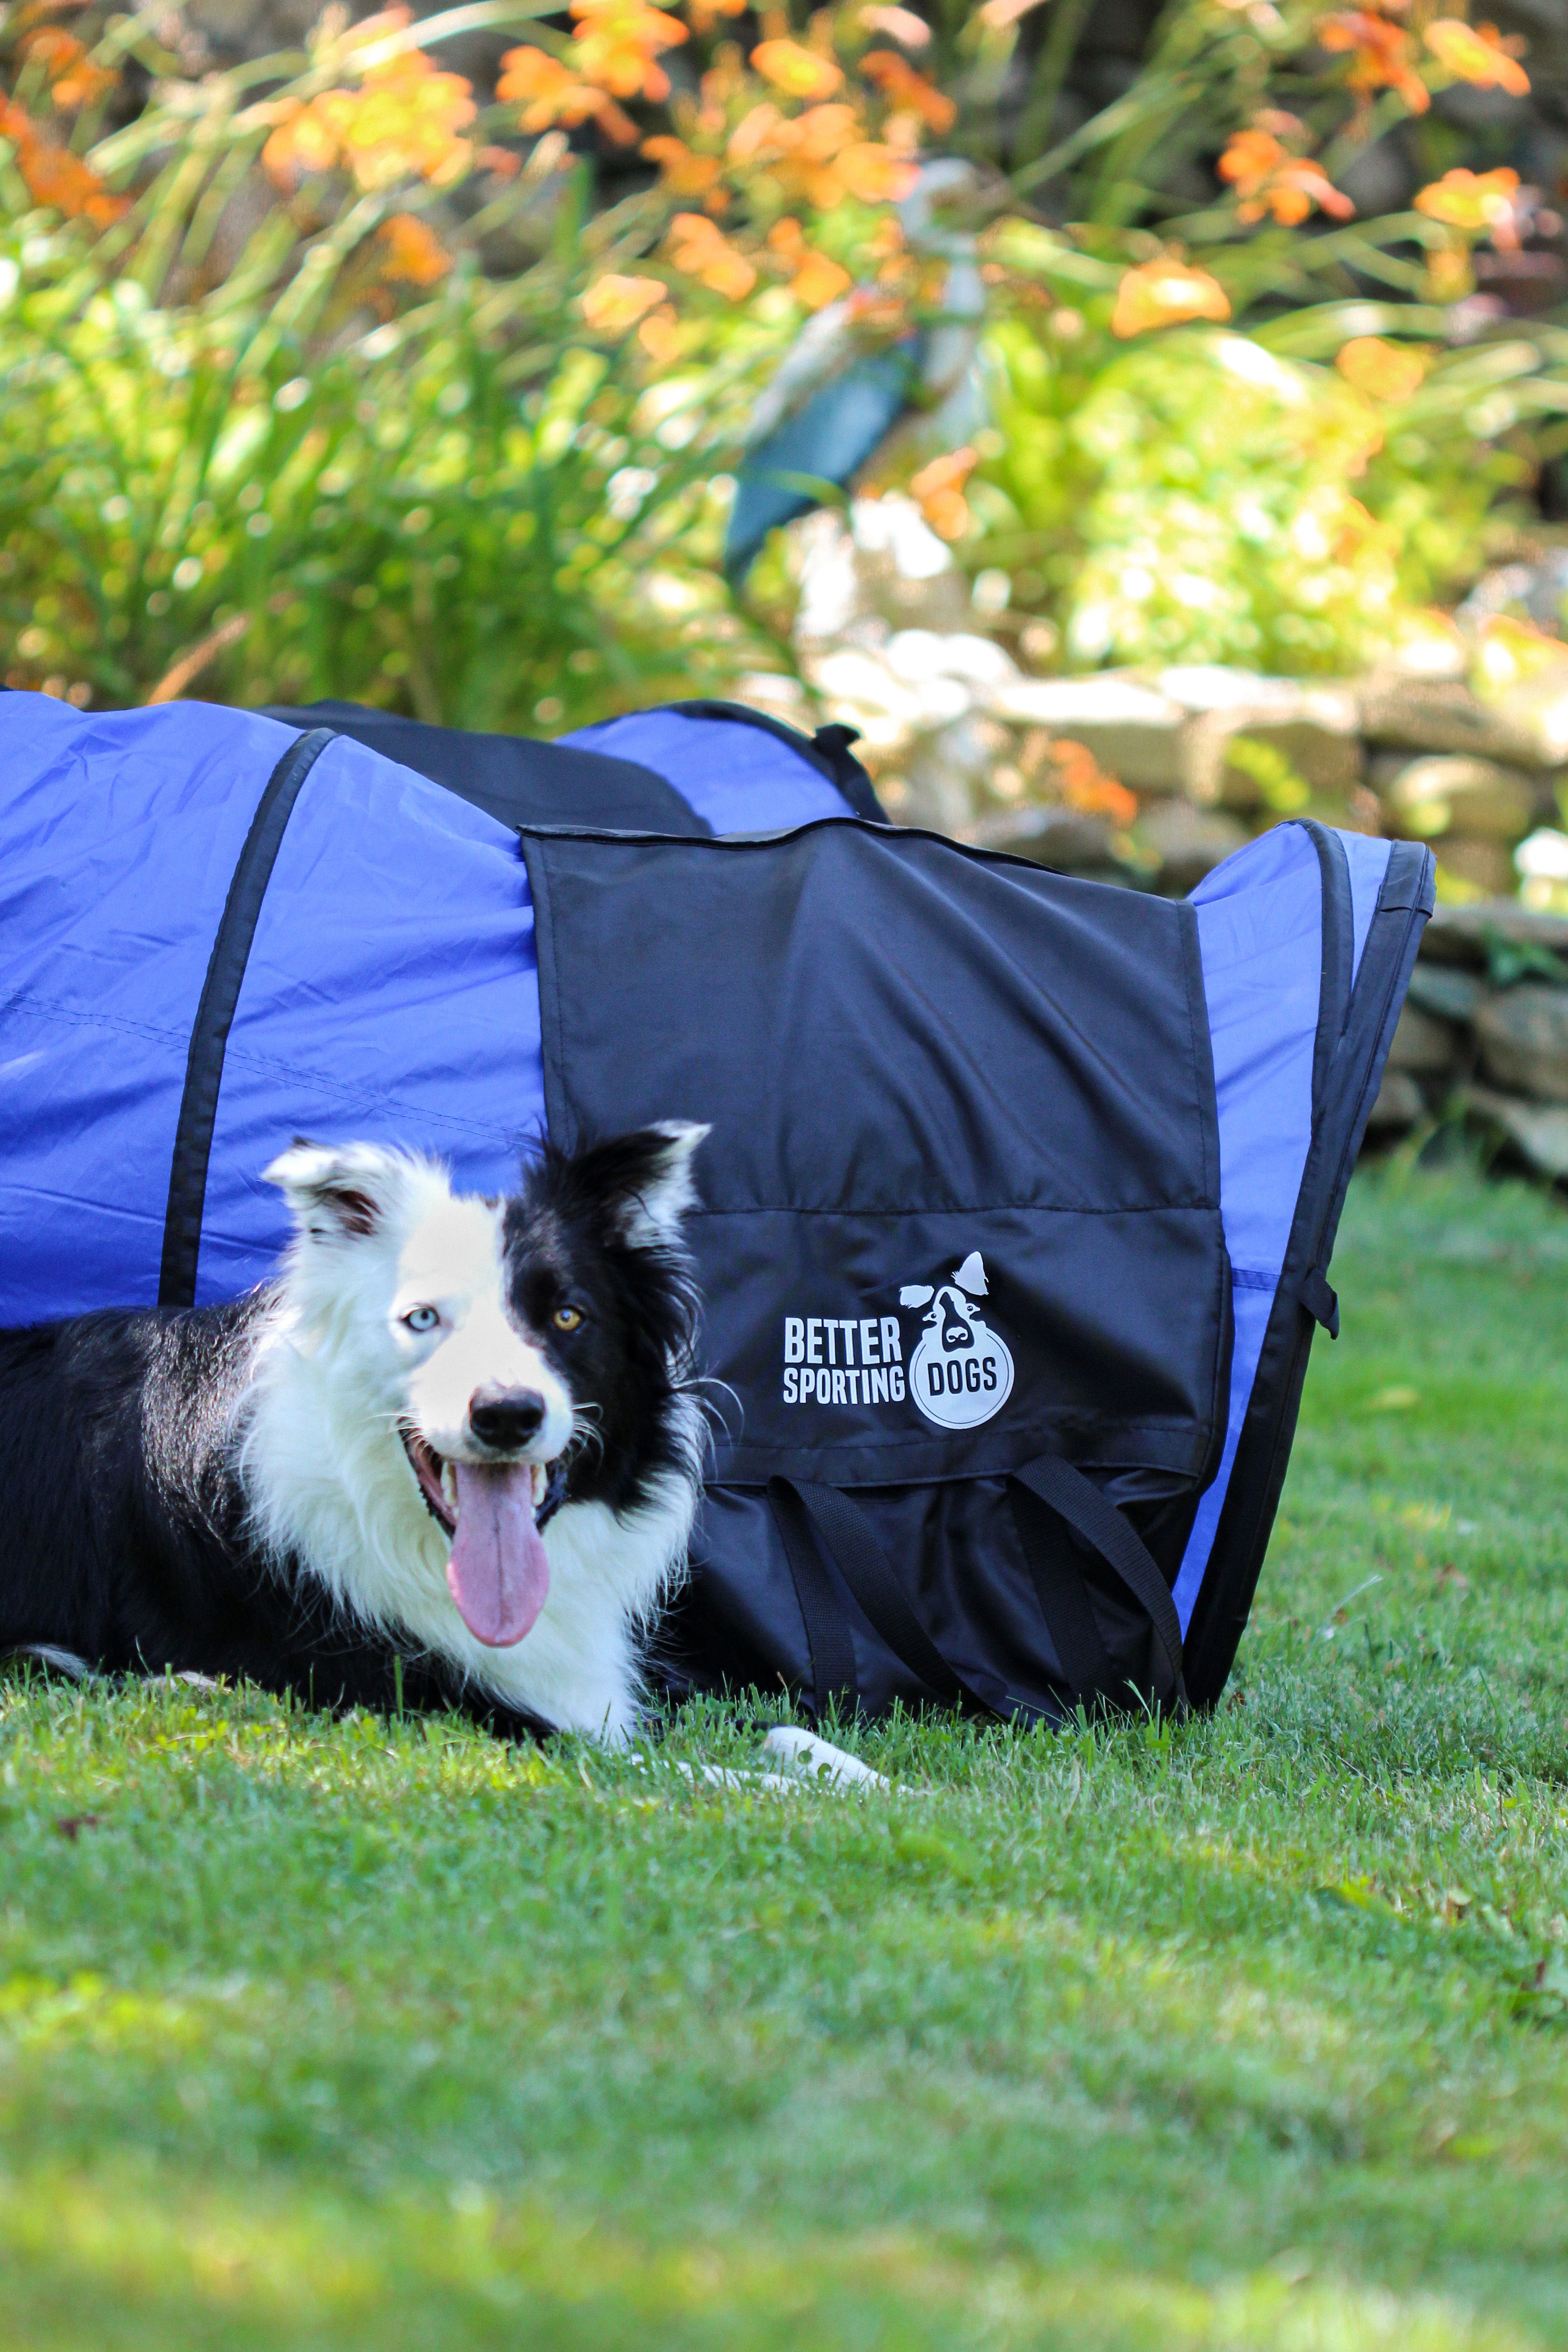 better sporting dogs dog agility tunnel sandbags